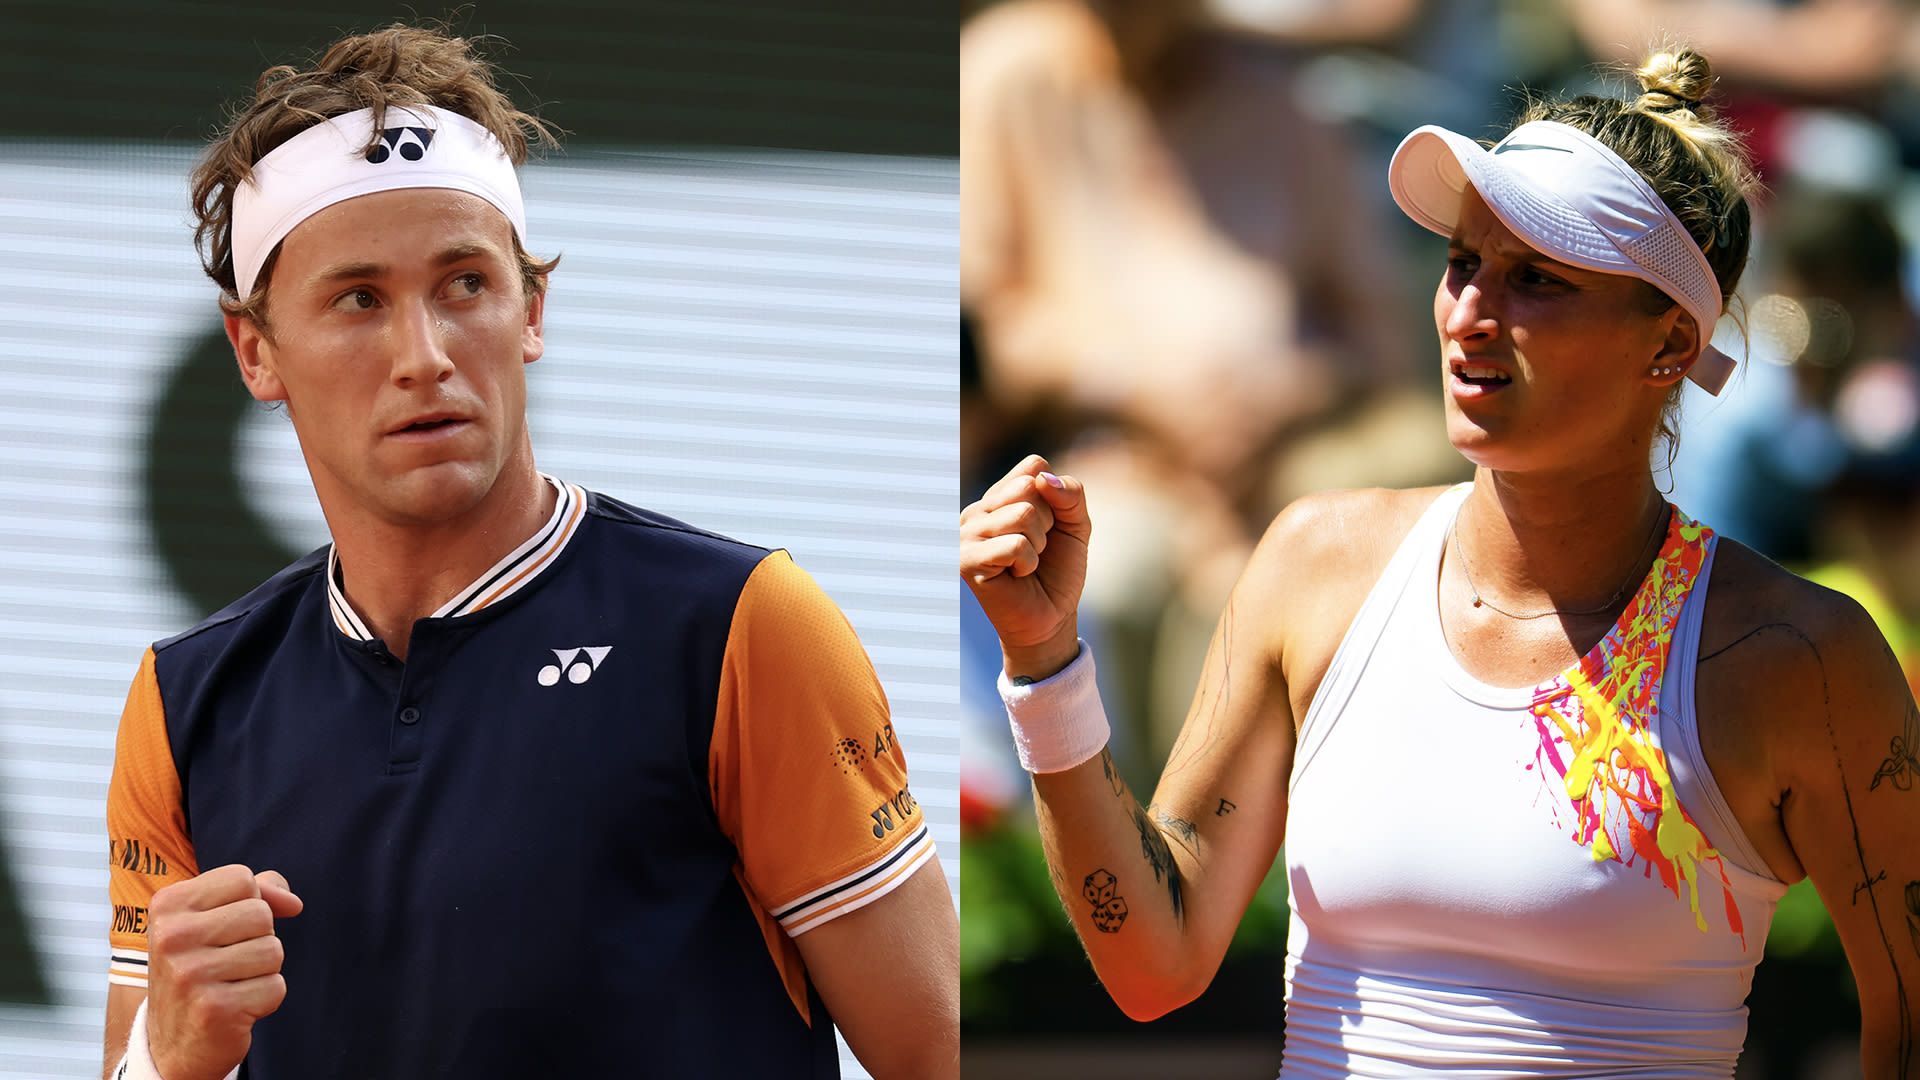 Casper Ruud, Marketa Vondrousova emerge as Roland Garros contenders | Tennis.com